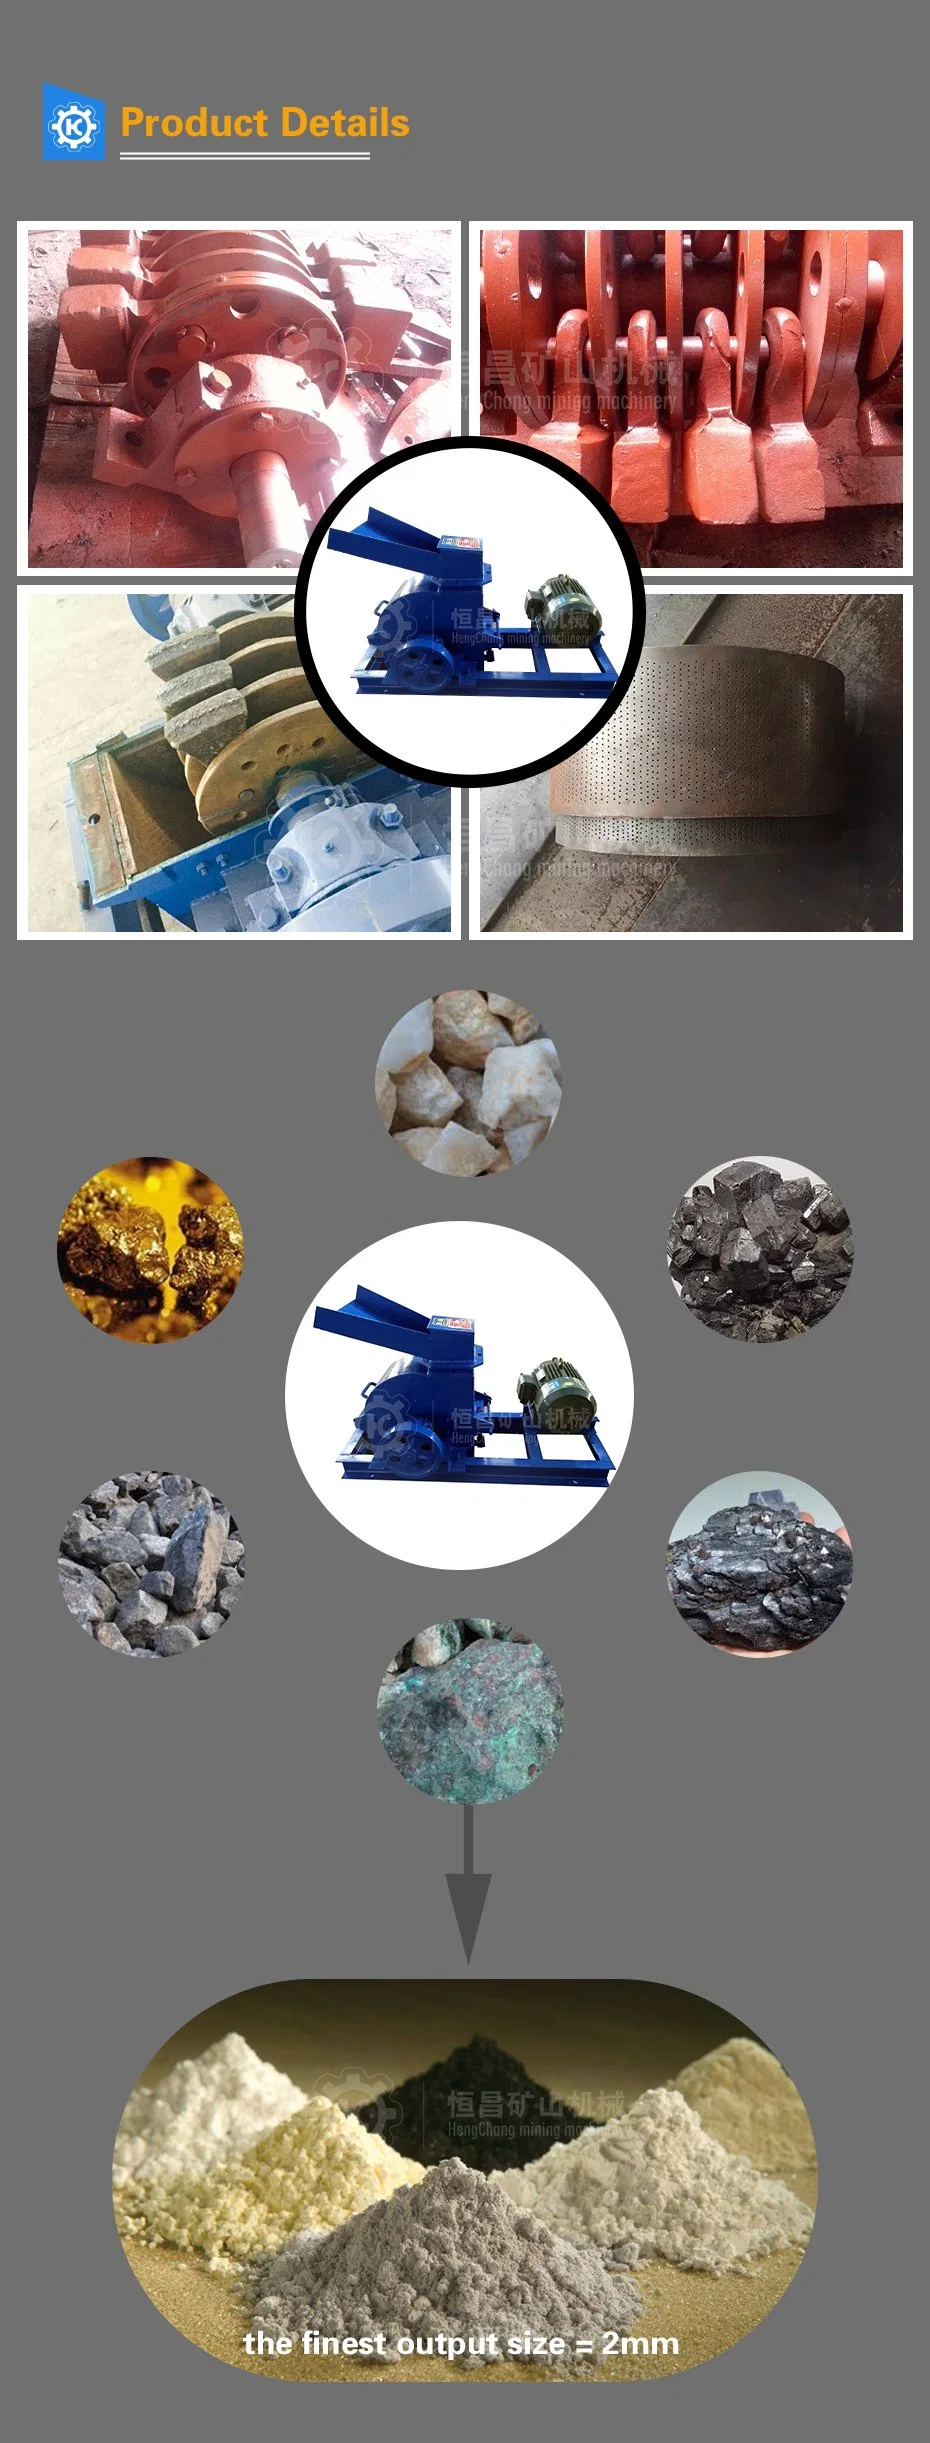 Tanzania 200*500 Small Gold Plant Hammer Mill Mining Grinder Stone Hammer Crushing Machine Rock Gold Hammer Mills